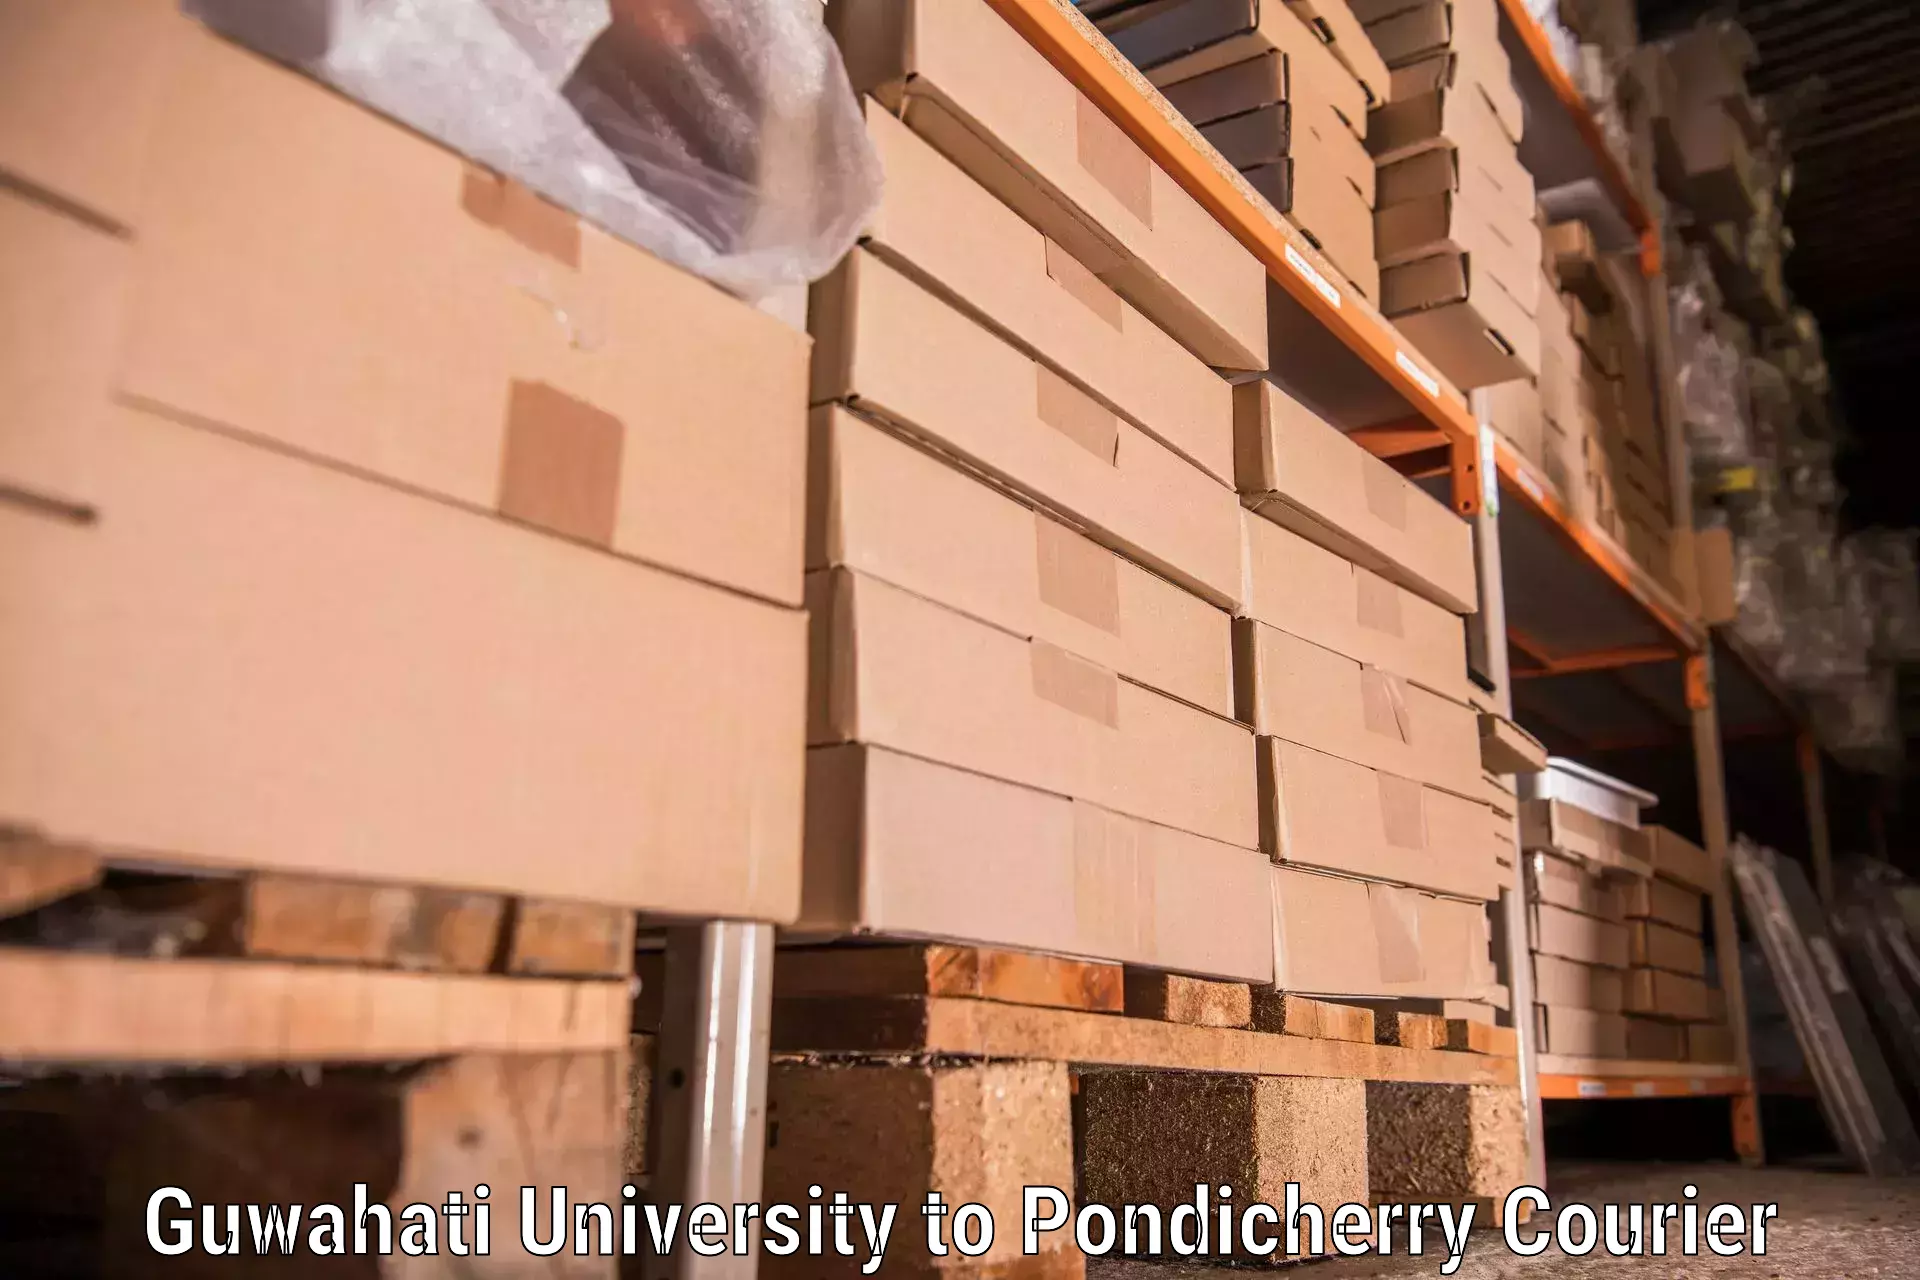 Moving and storage services Guwahati University to Pondicherry